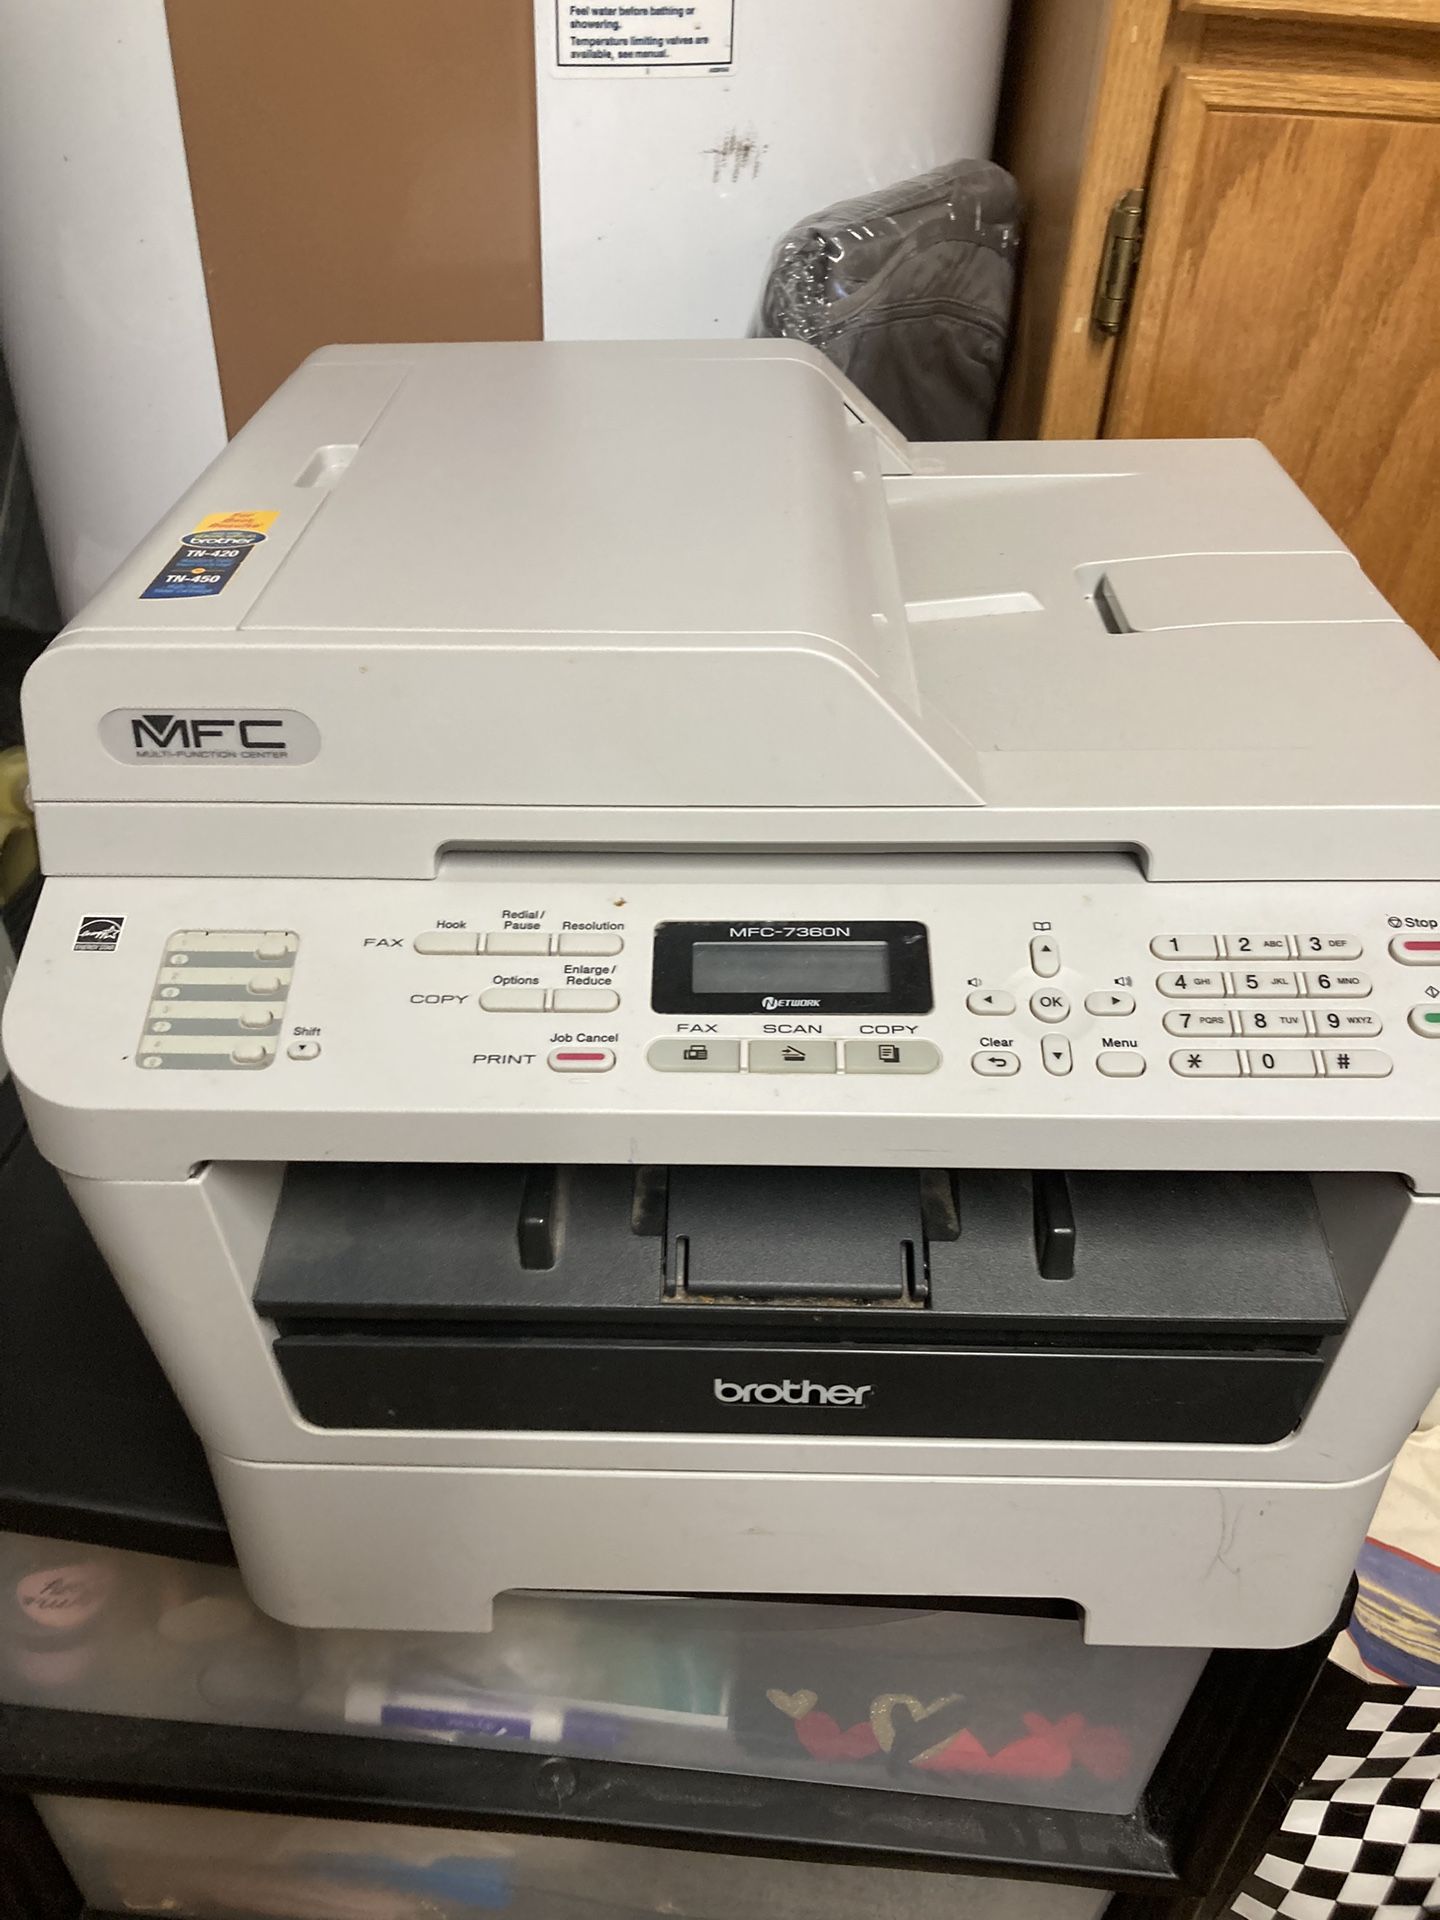 Brother Printer Fax Scanner Copy Machine